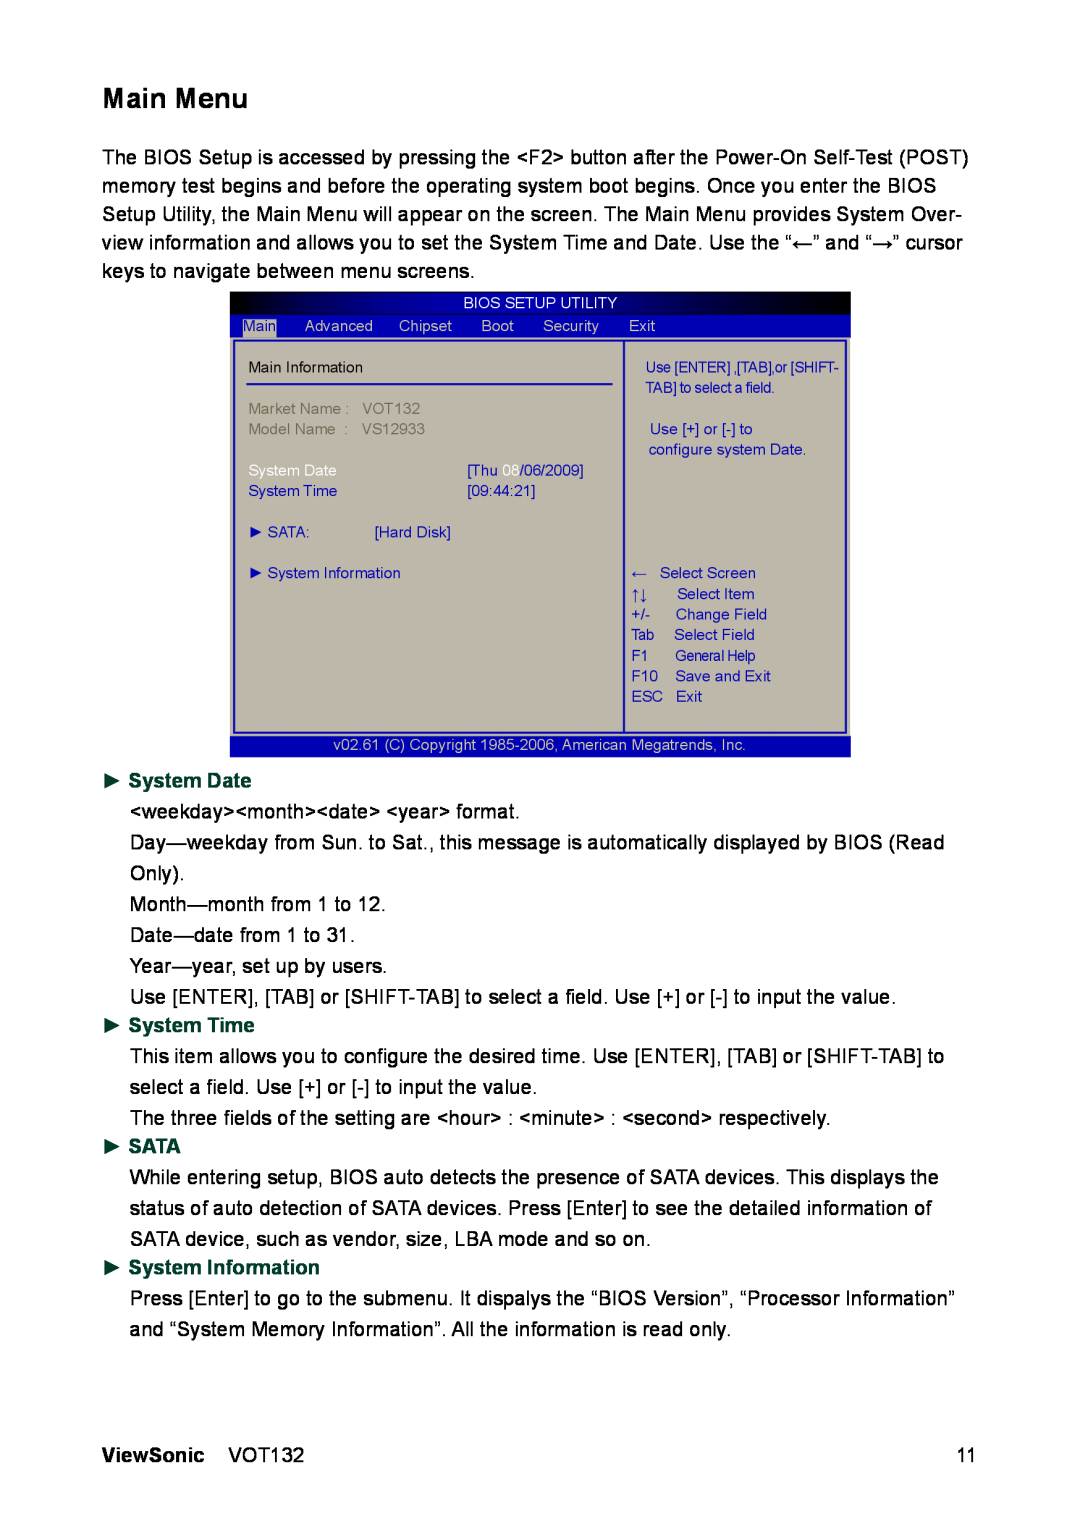 ViewSonic VS12933 manual Main Menu, System Date, System Time, Sata, System Information, ViewSonic VOT132 